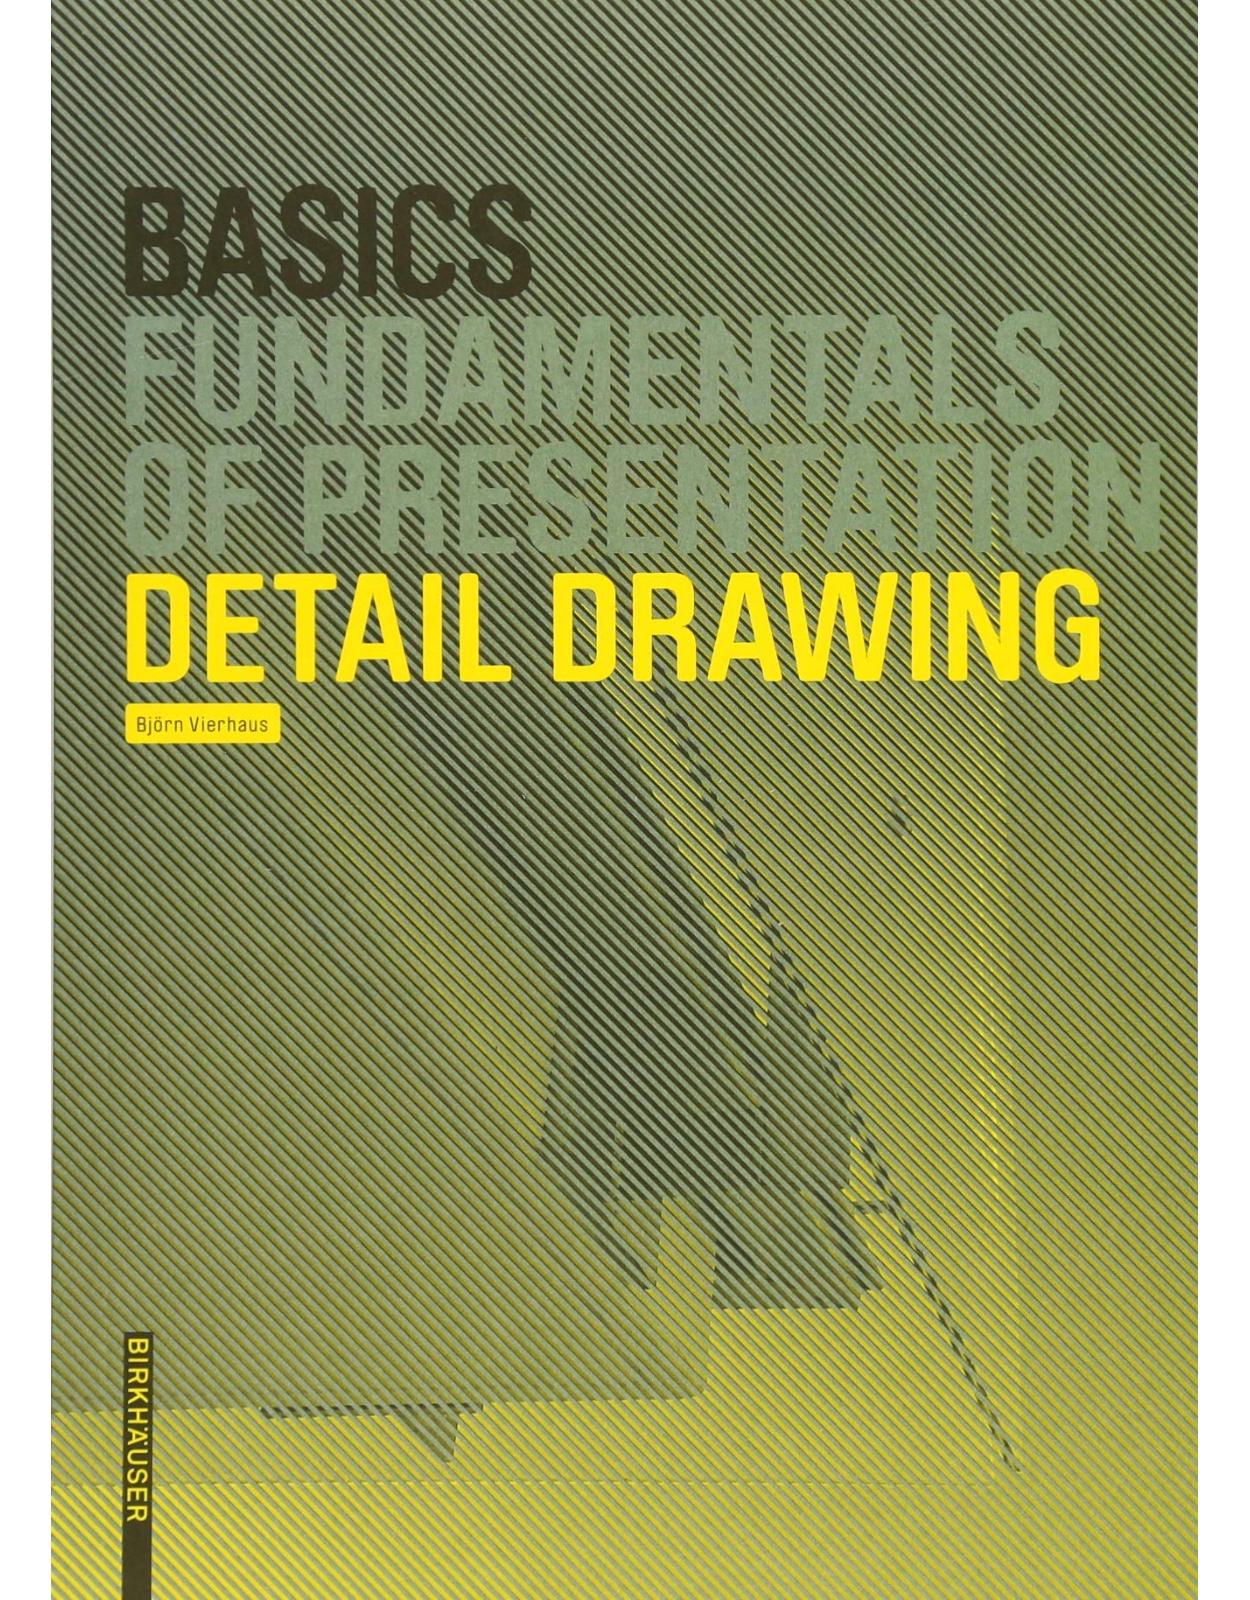 Basics Detail Drawing